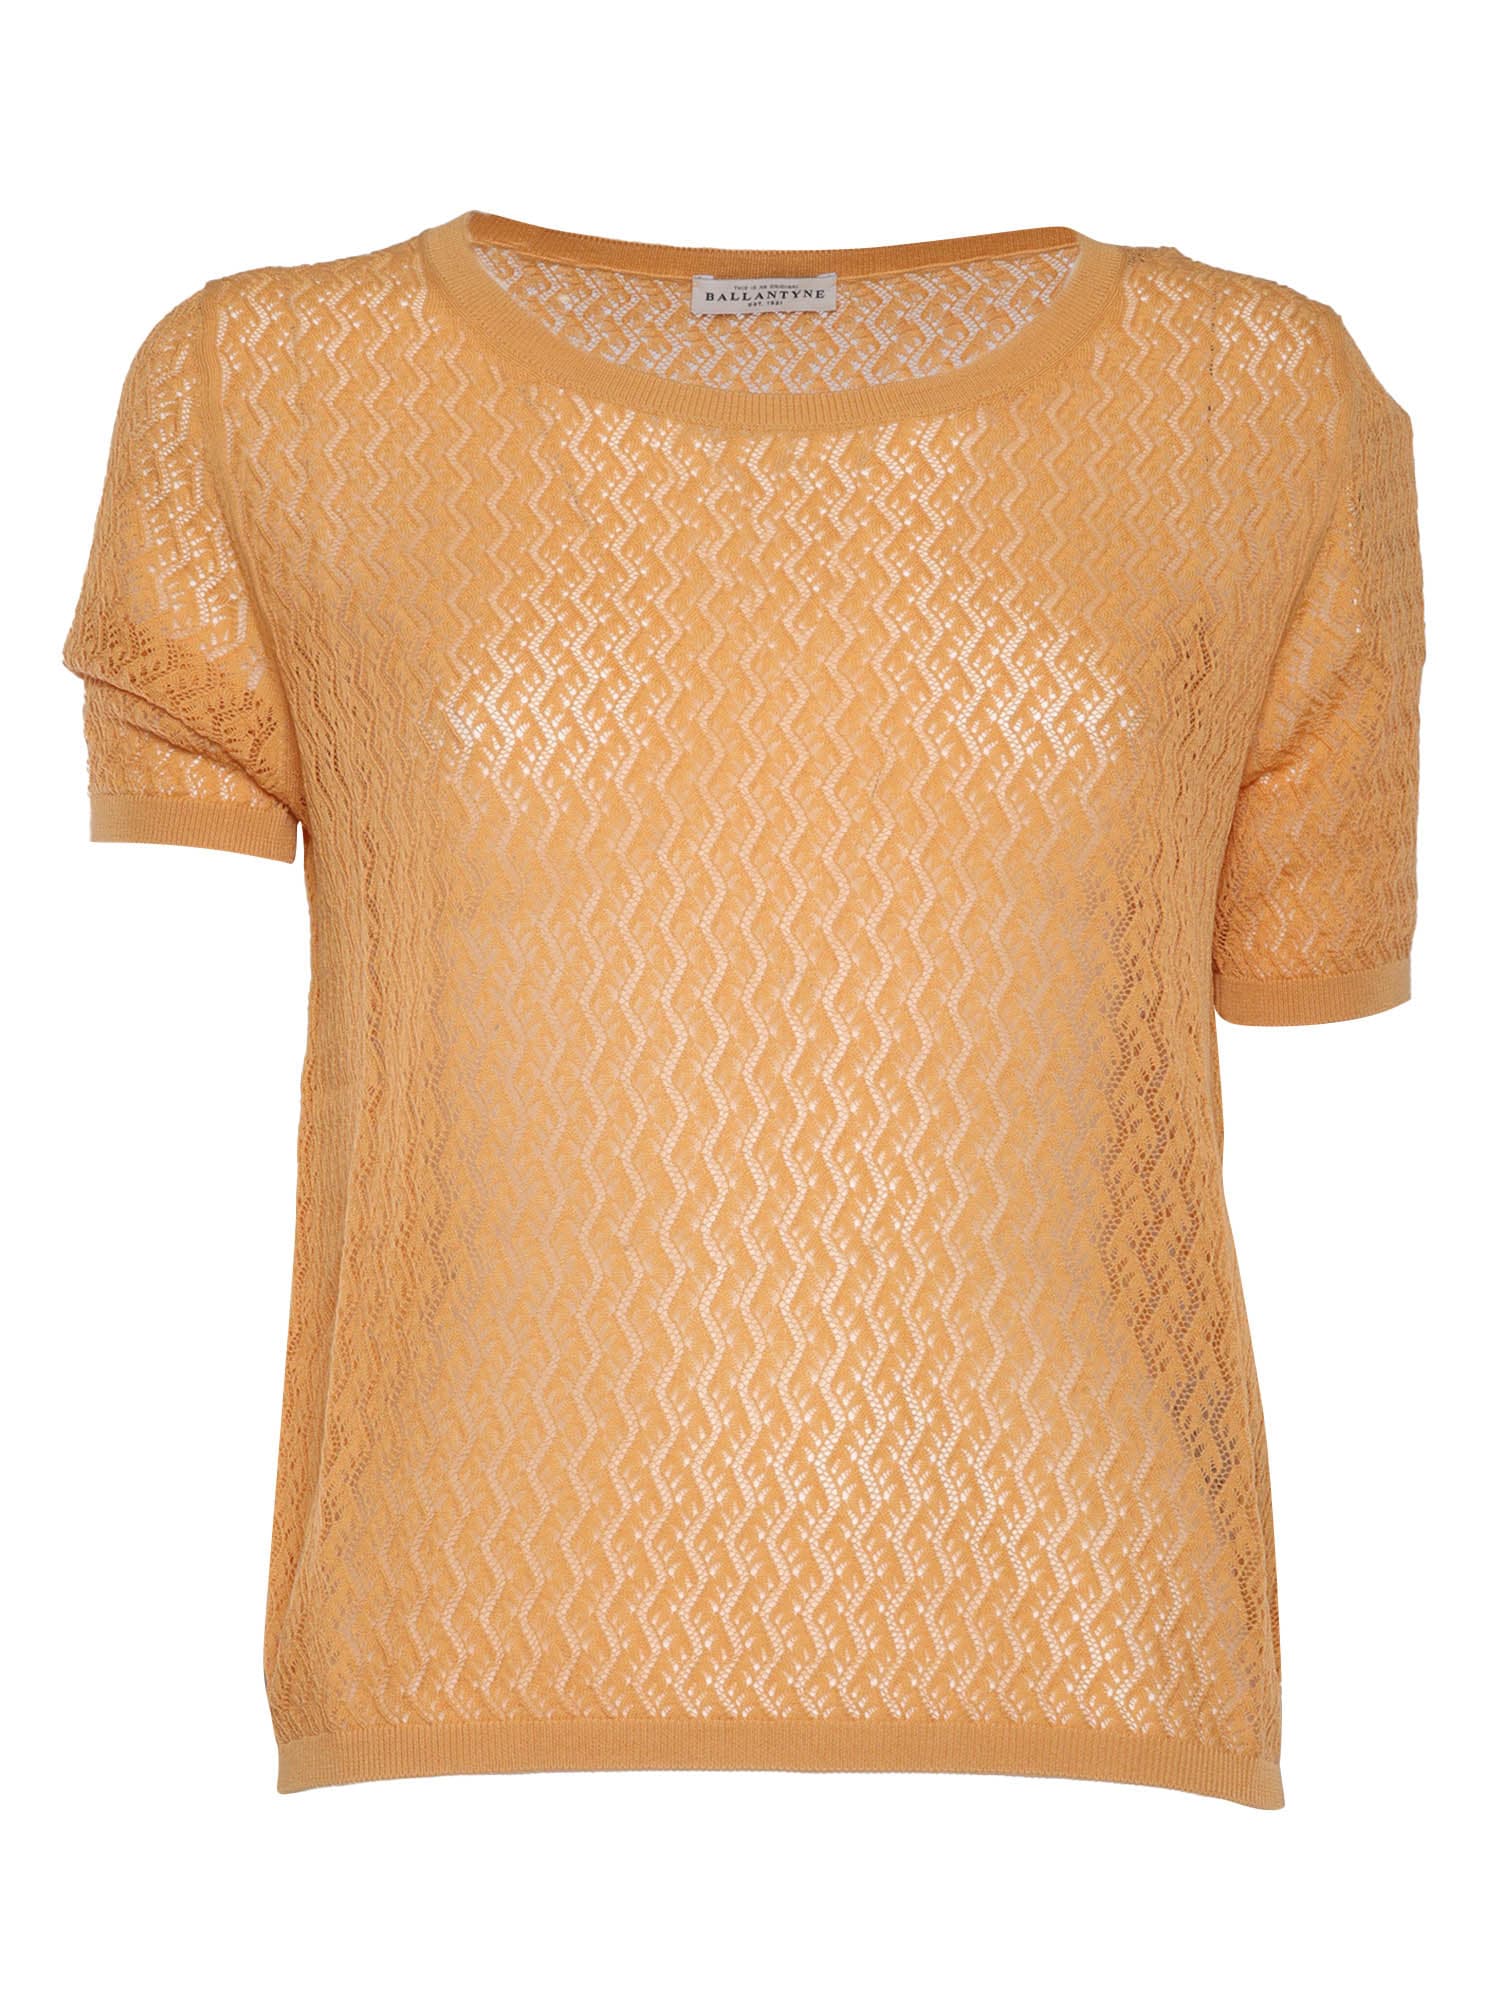 Orange Cotton Knit Sweater